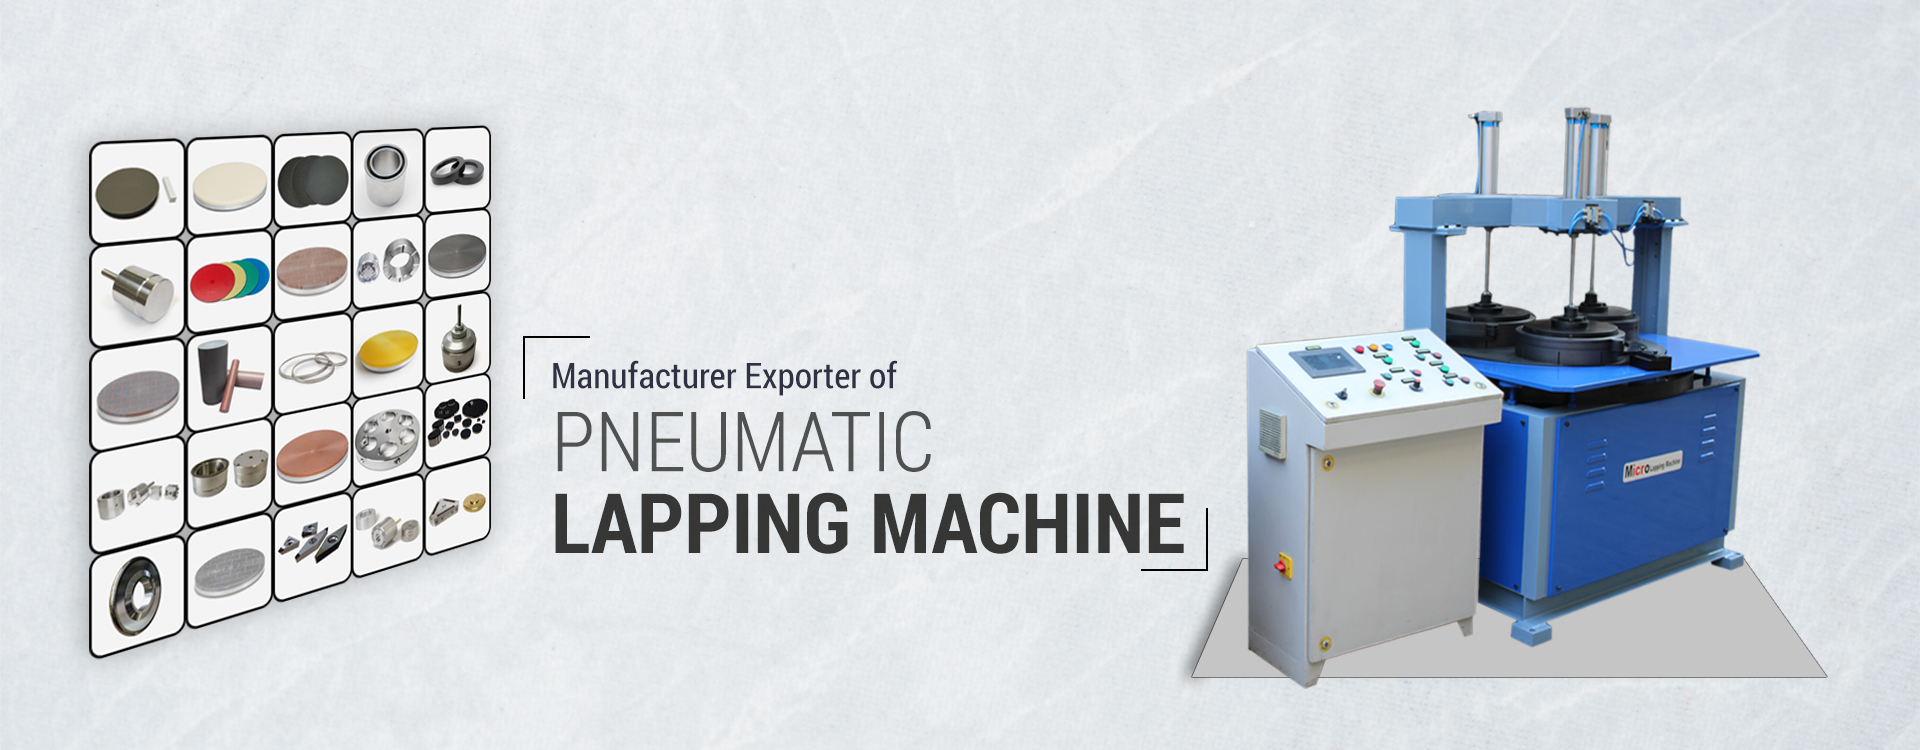 Lapping Machine Manufacturer, Pneumatic Lapping Machine